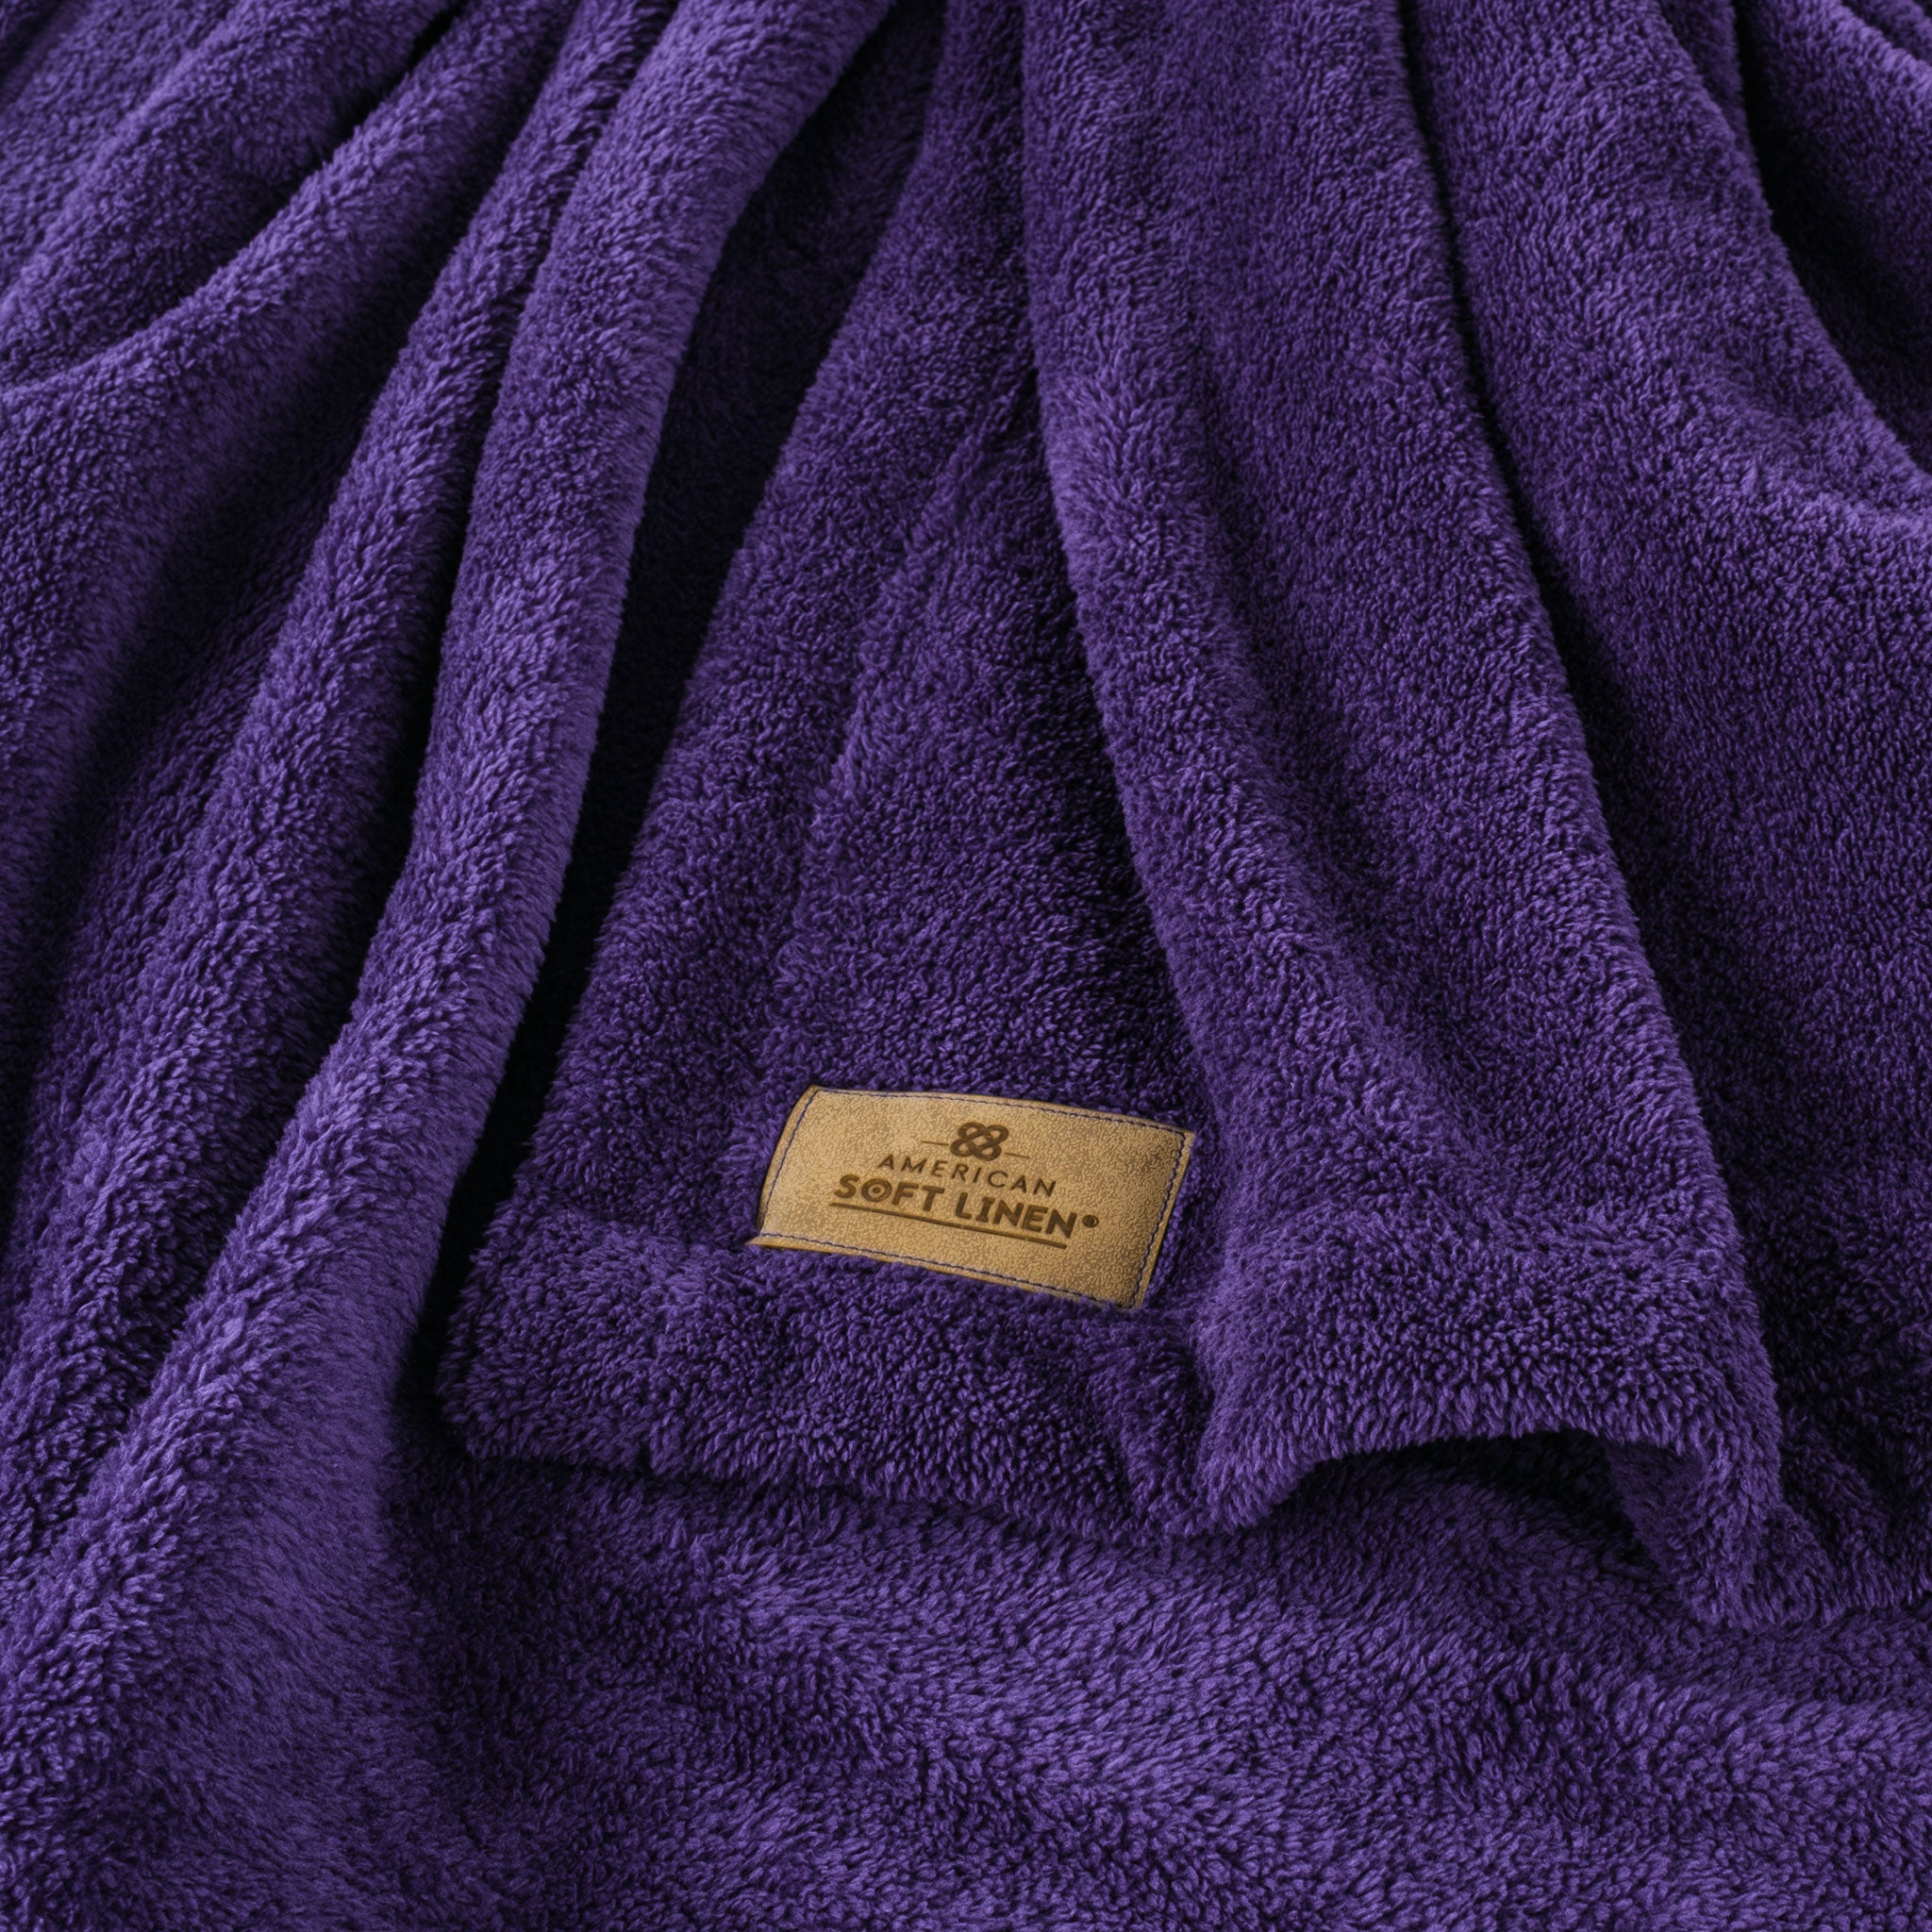 American Soft Linen - Bedding Fleece Blanket - Wholesale - 15 Set Case Pack - Twin Size 60x80 inches - Purple - 4